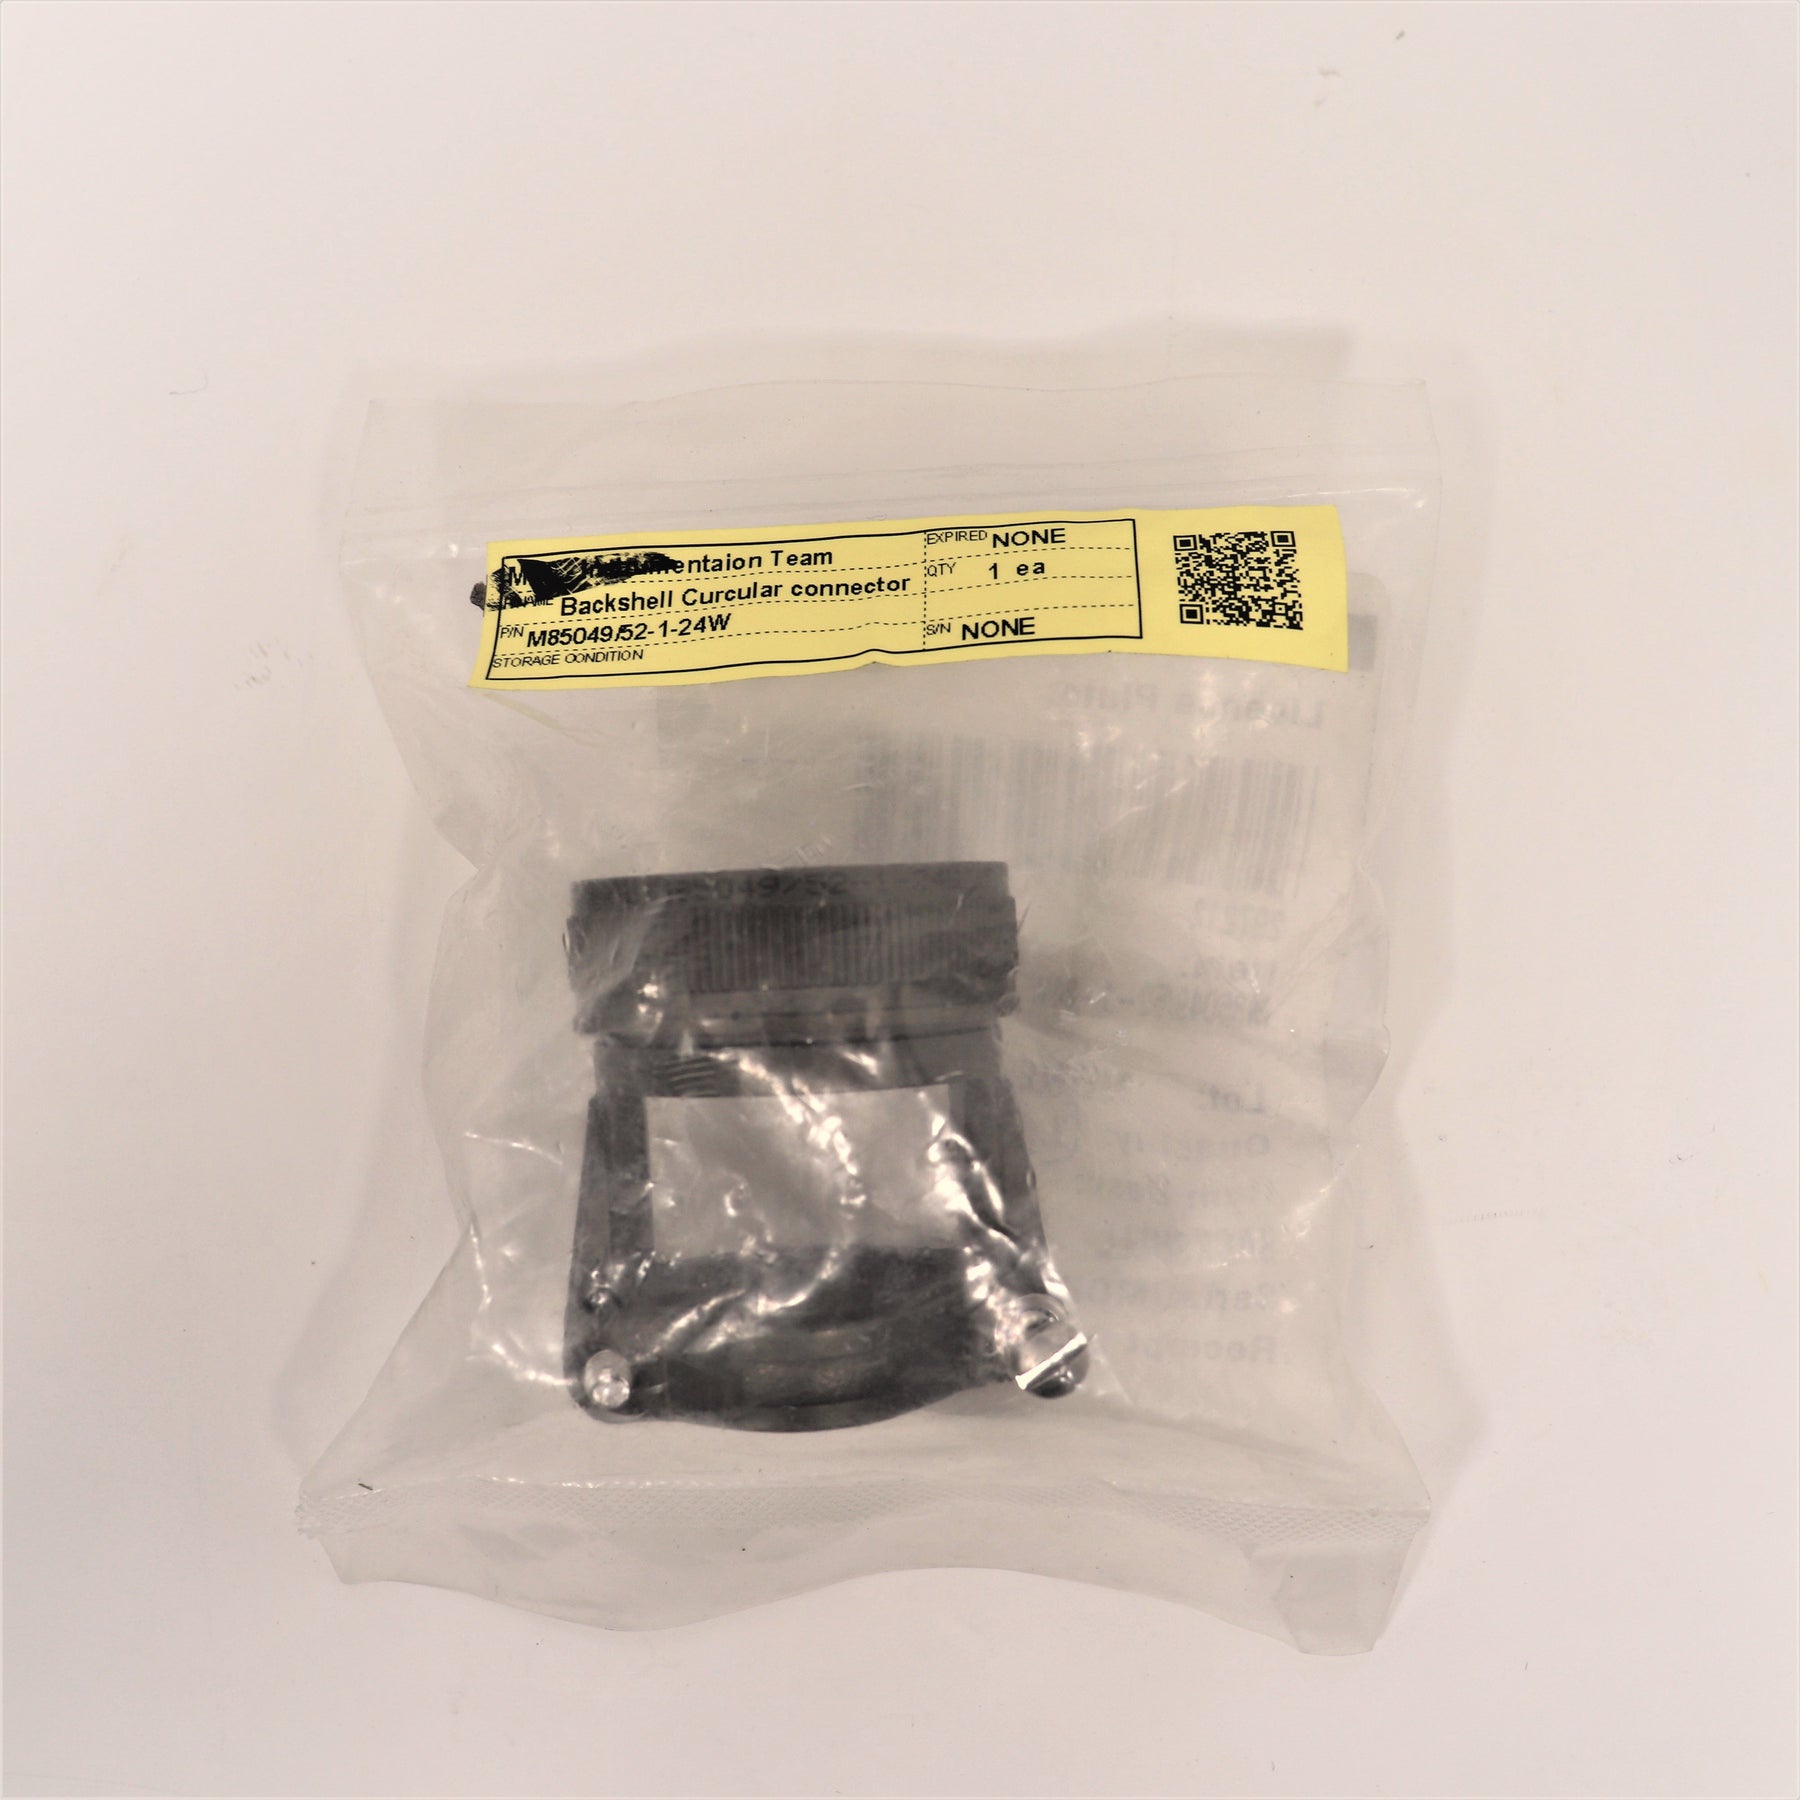 Amphenol Backshell Strain Relief Size 24 M85049/52-1-24W